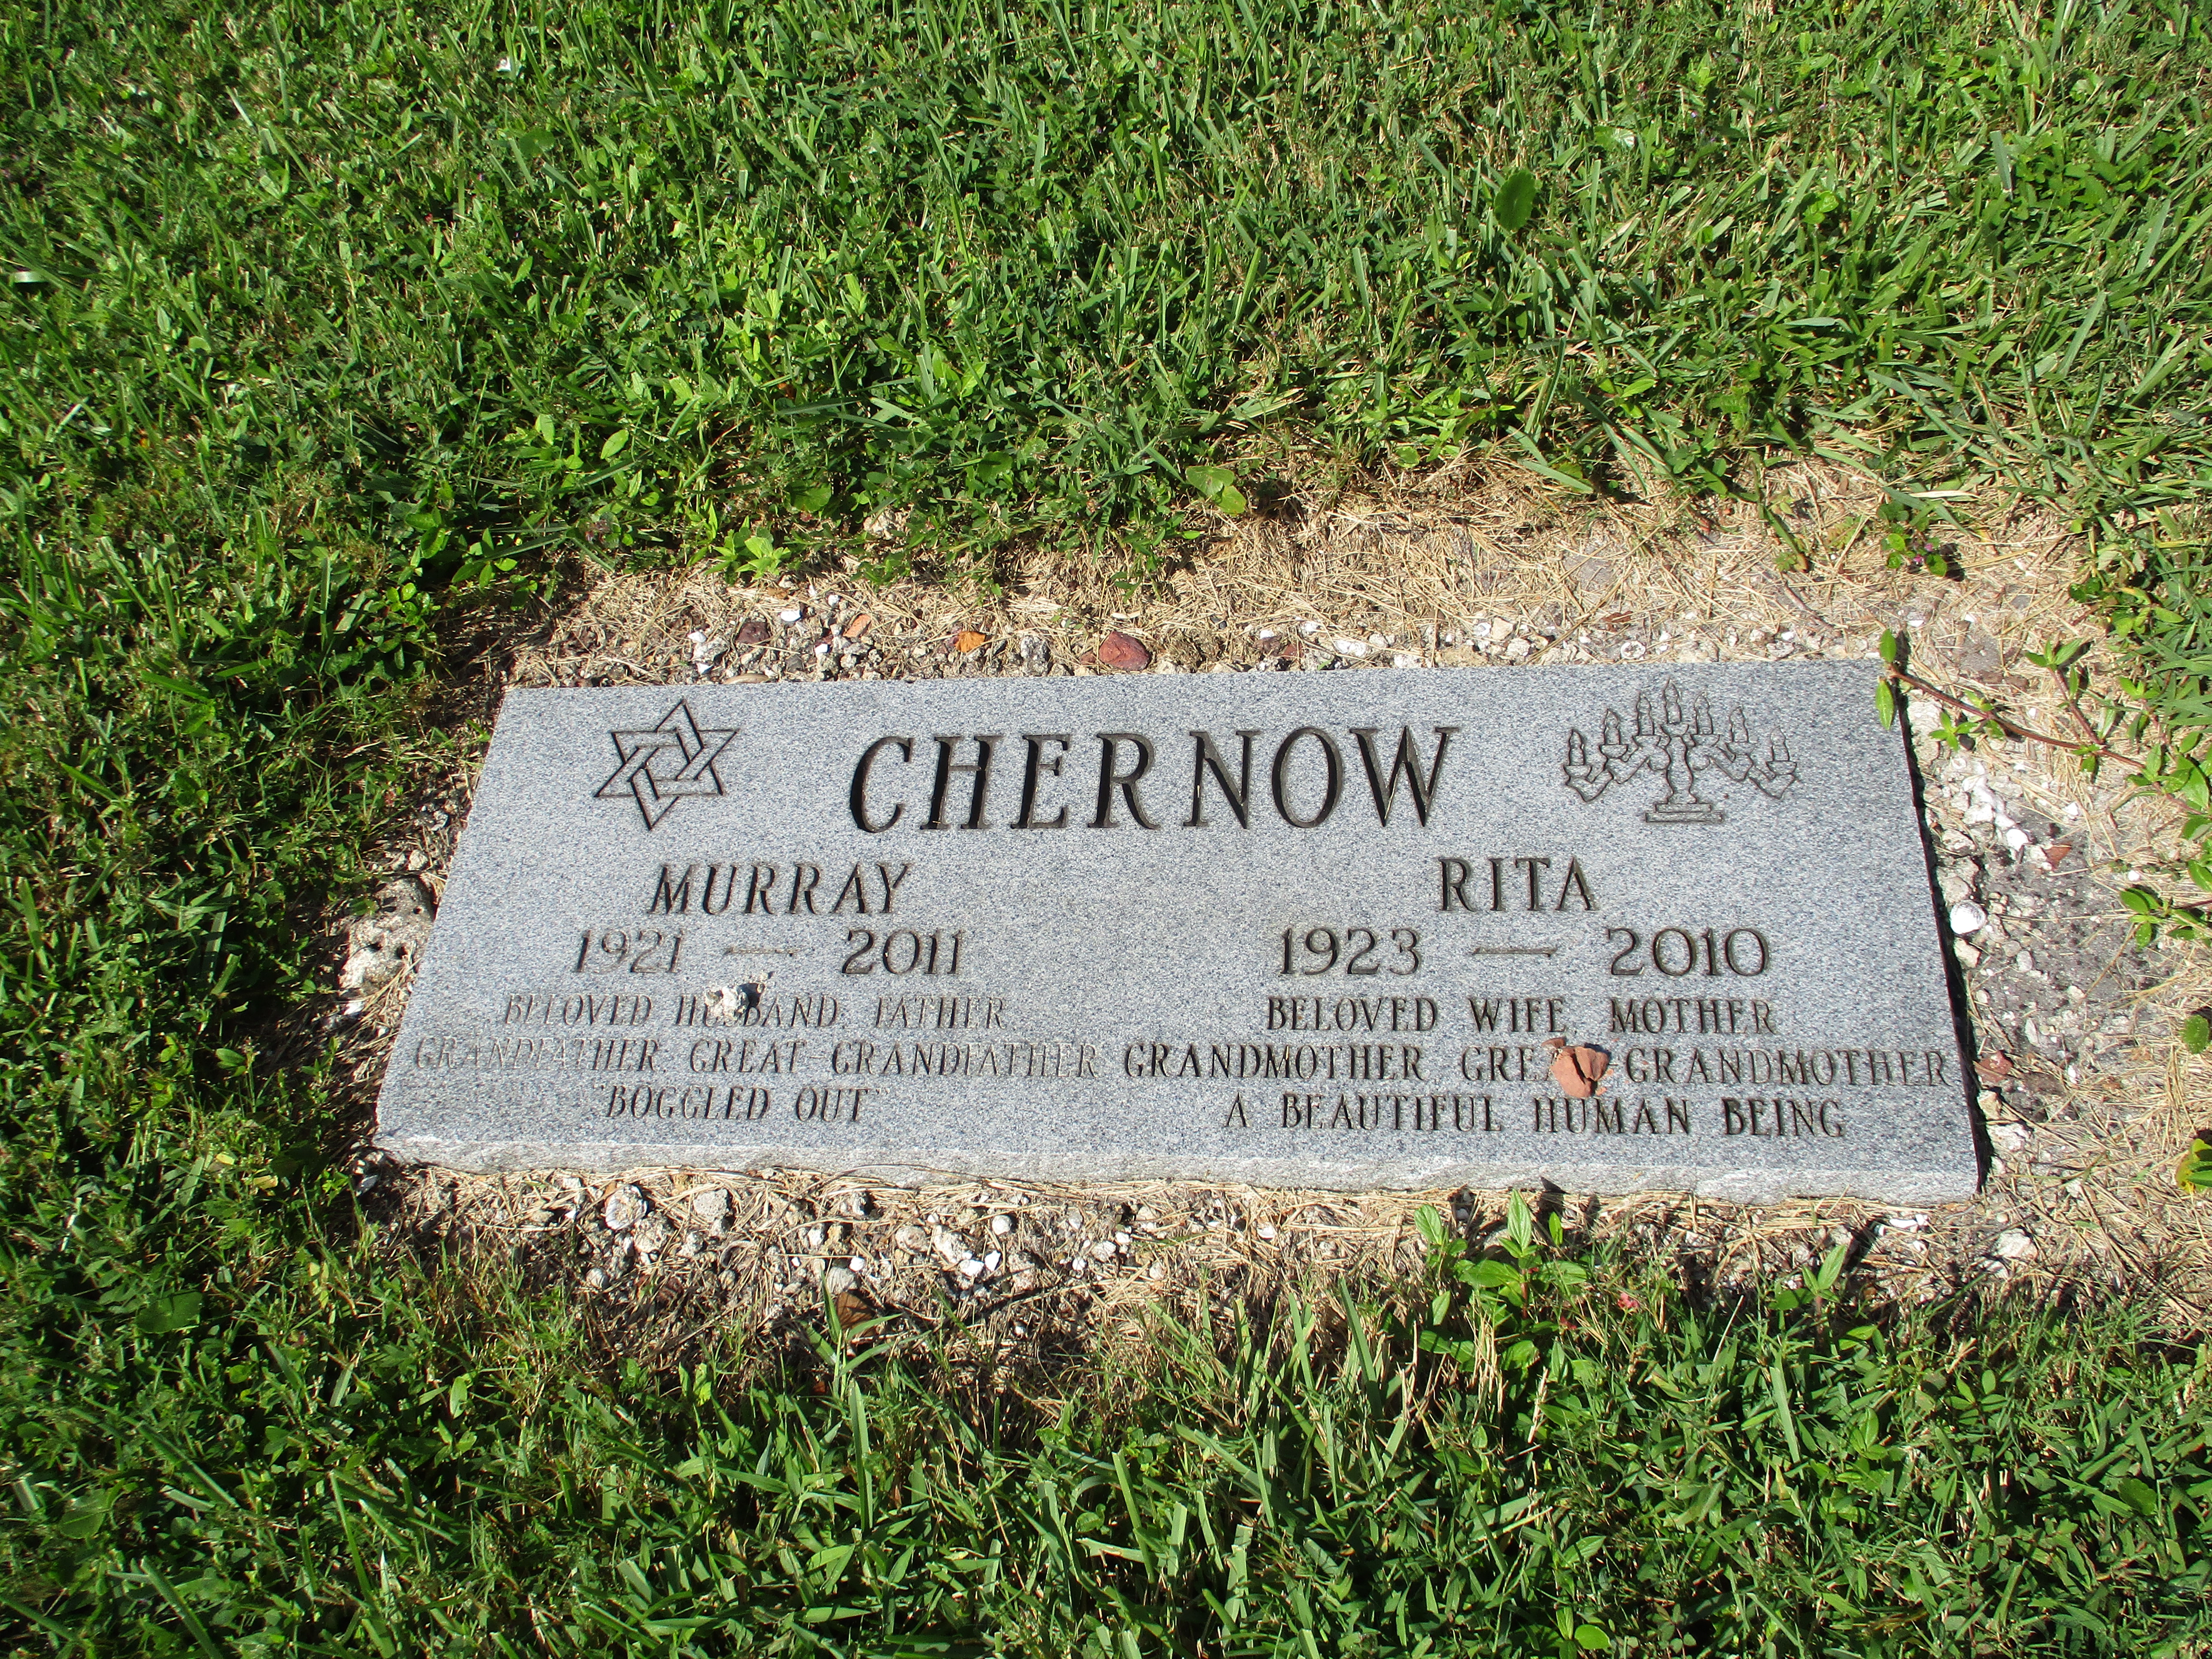 Murray Chernow